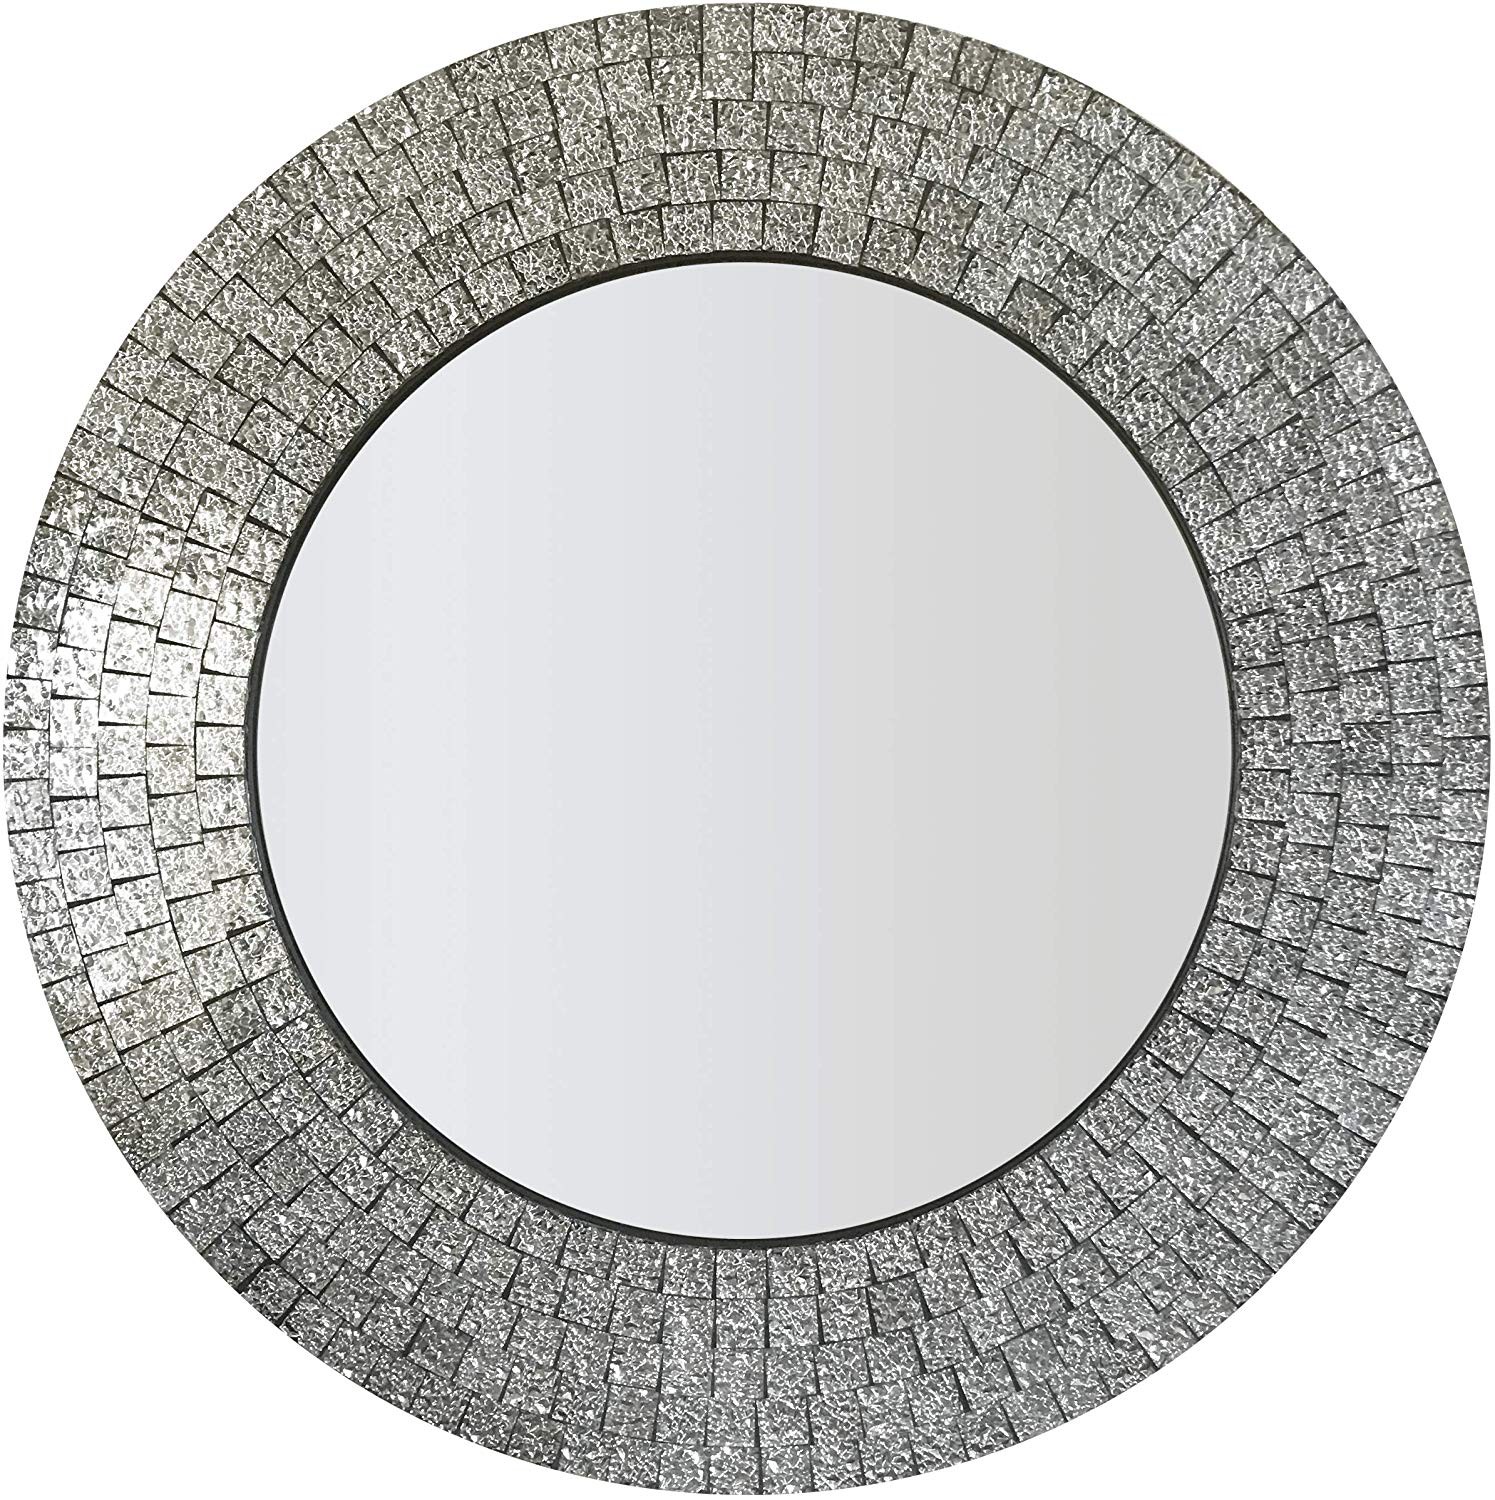 Round Crackle Mirror Mosaic Silver Frame 40 x 40cm Bedroom Bathroom Hall Home 